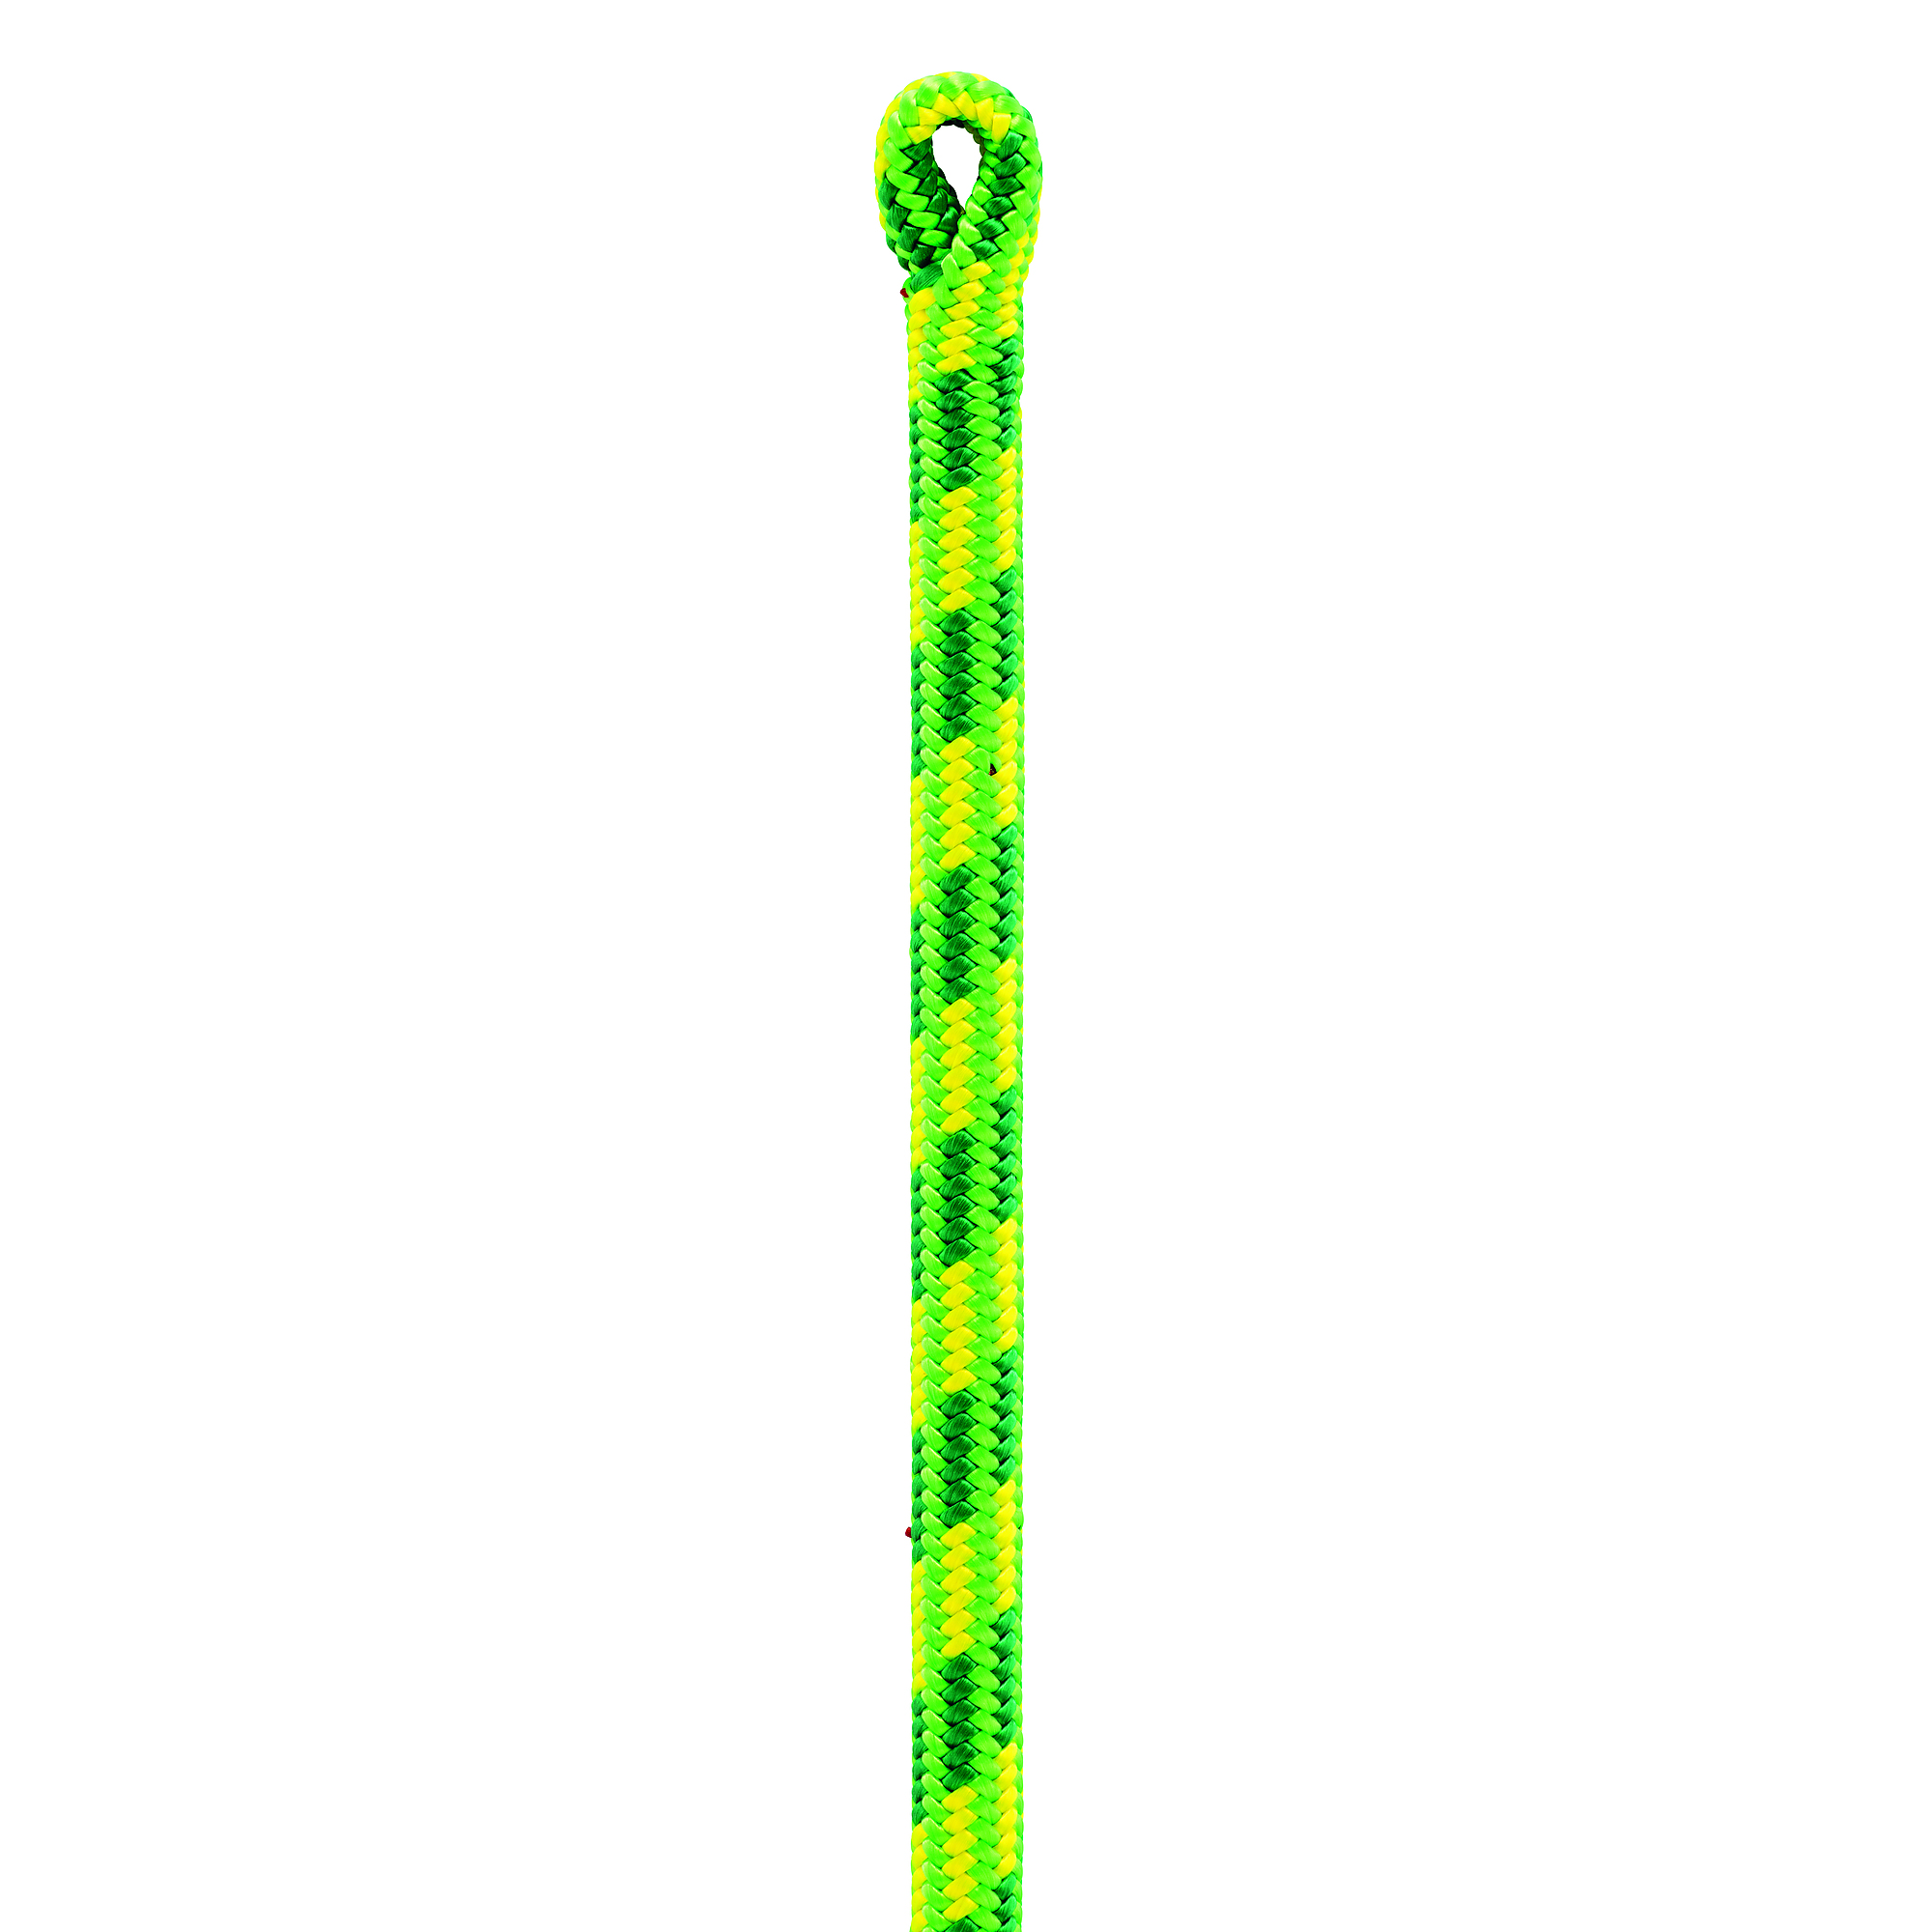 Petzl, CONTROL tree care rope 12.5mm 197ft. 1splice green, Model R080AA04